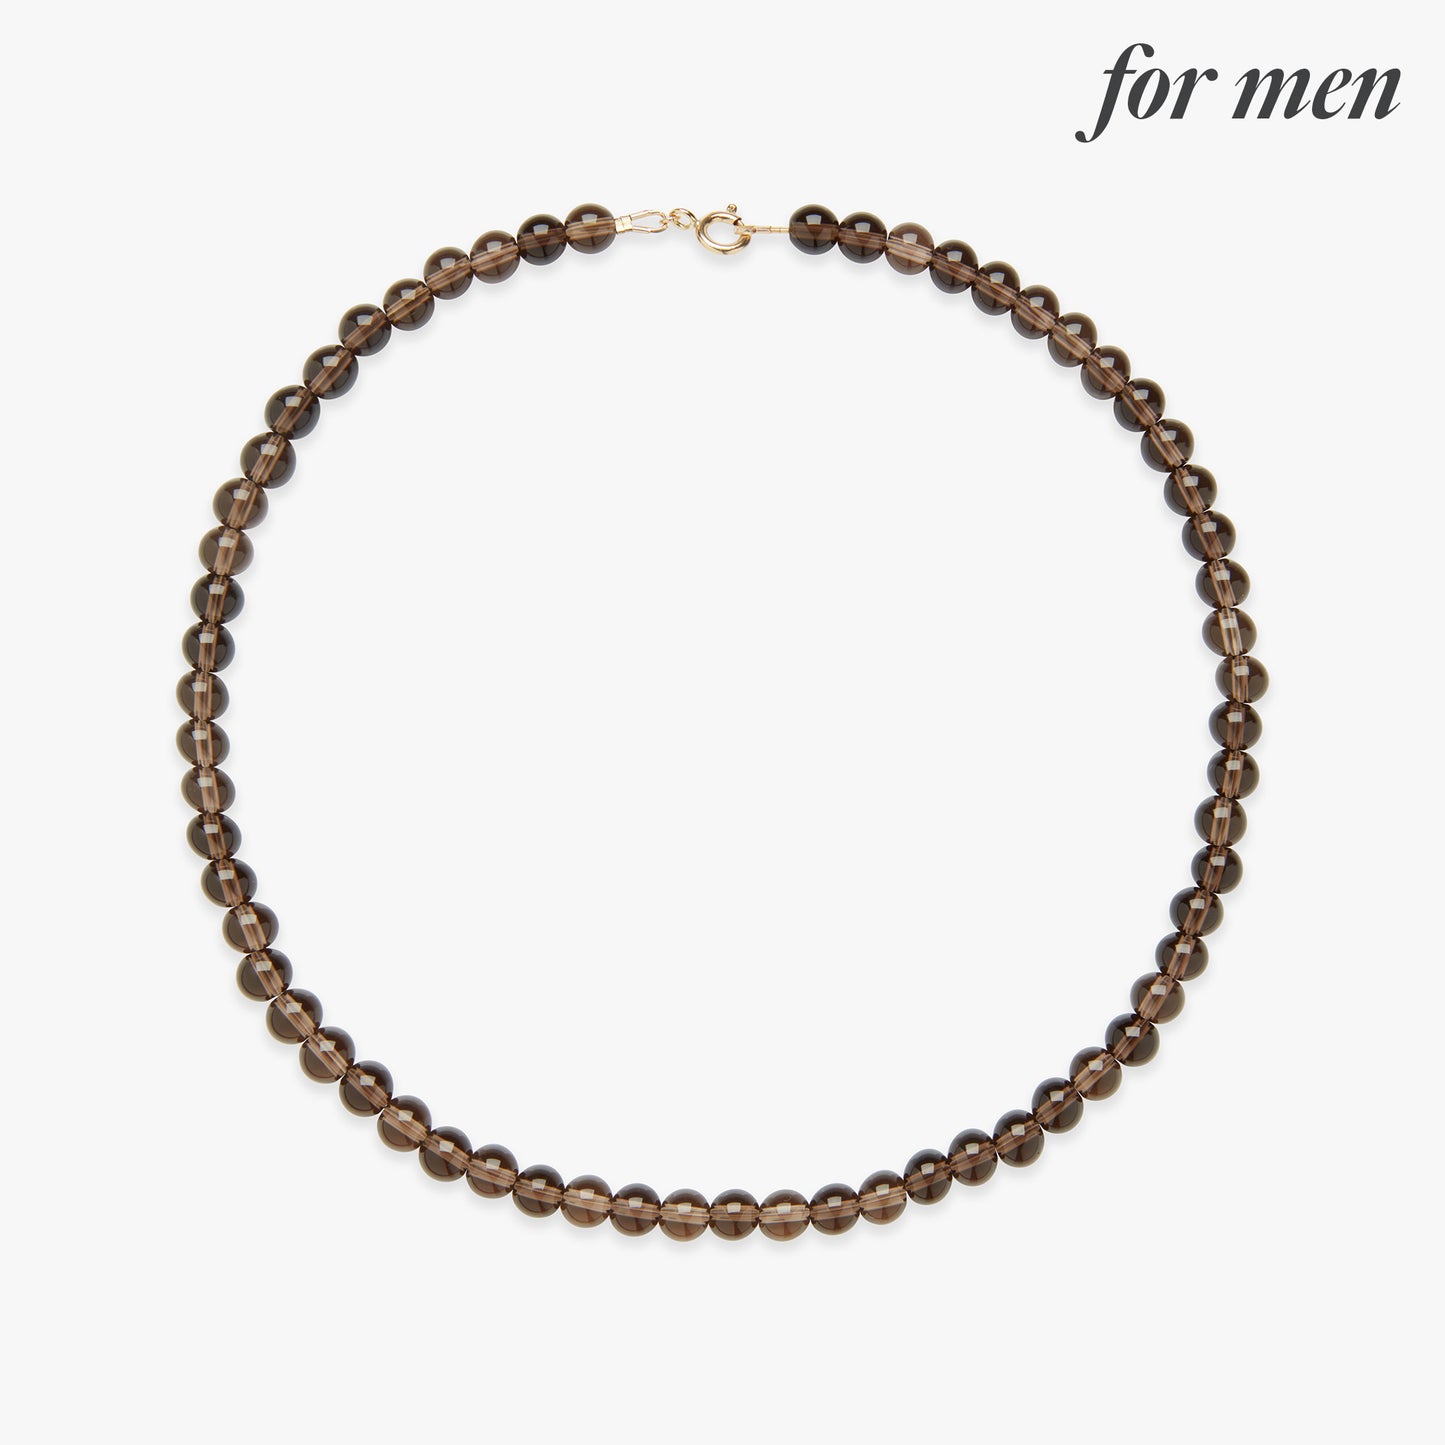 Americano gemstone necklace gold filled for men